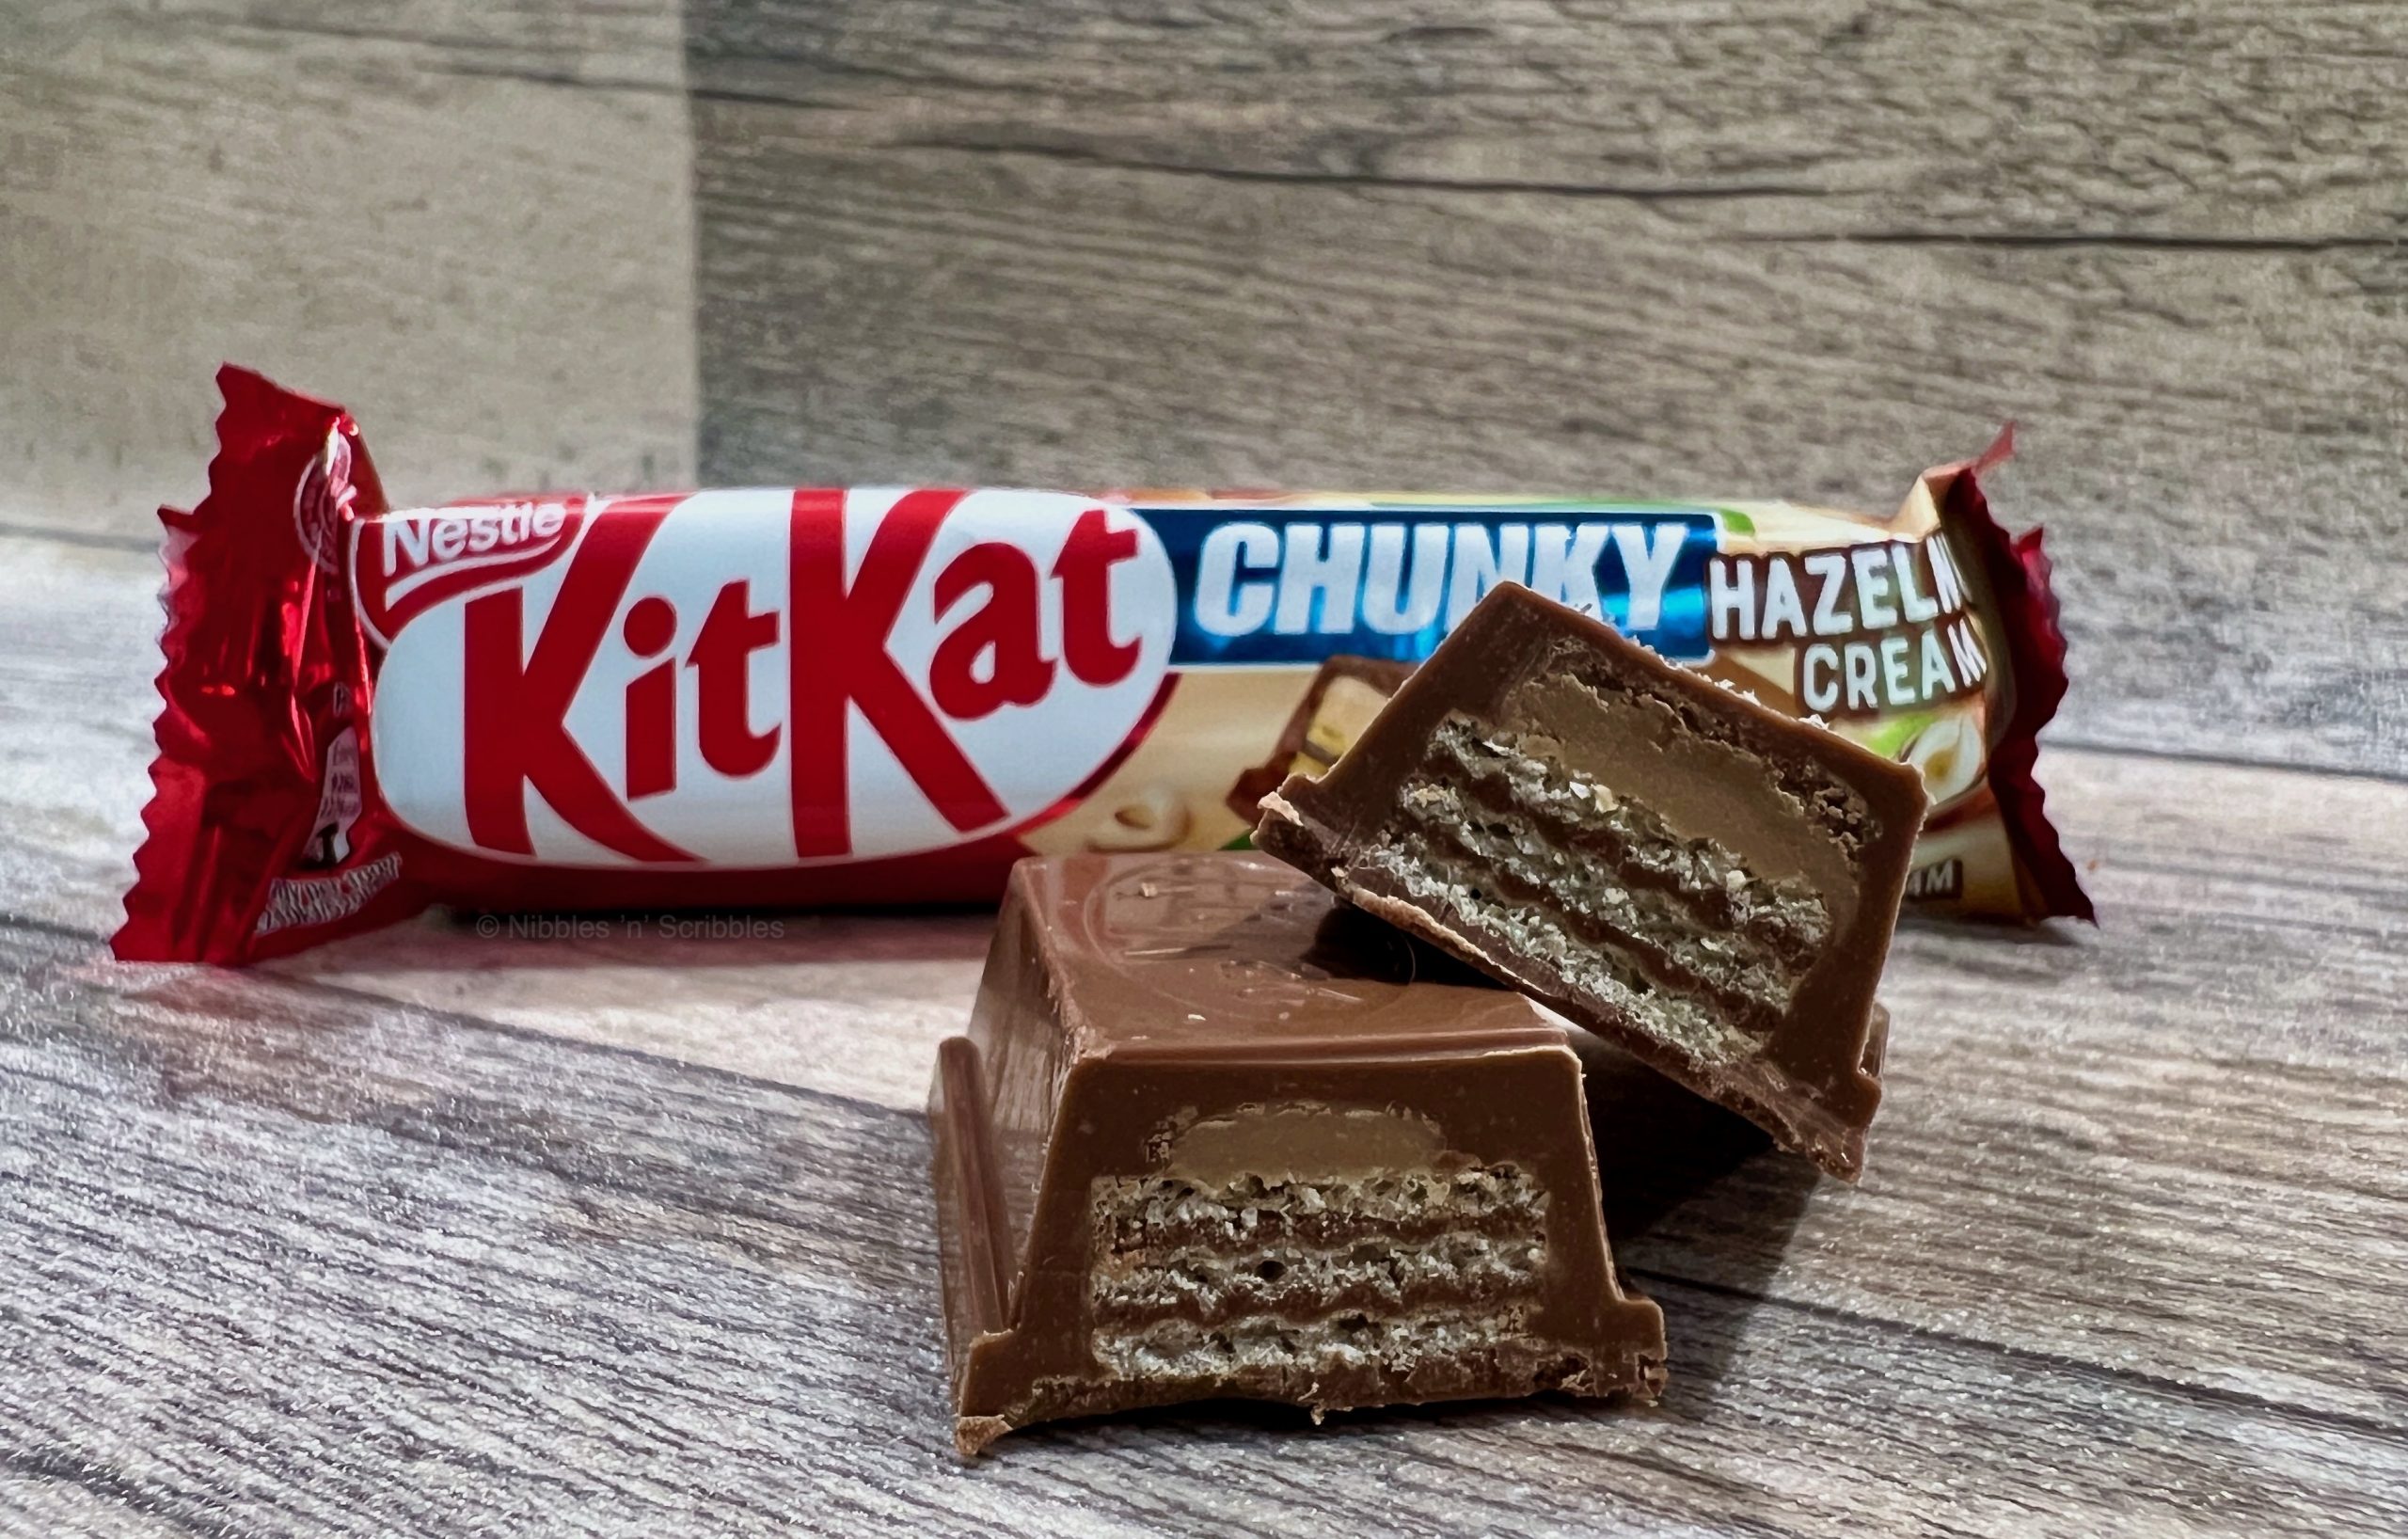 Limited Edition KitKat Chunky Hazelnut Cream Review